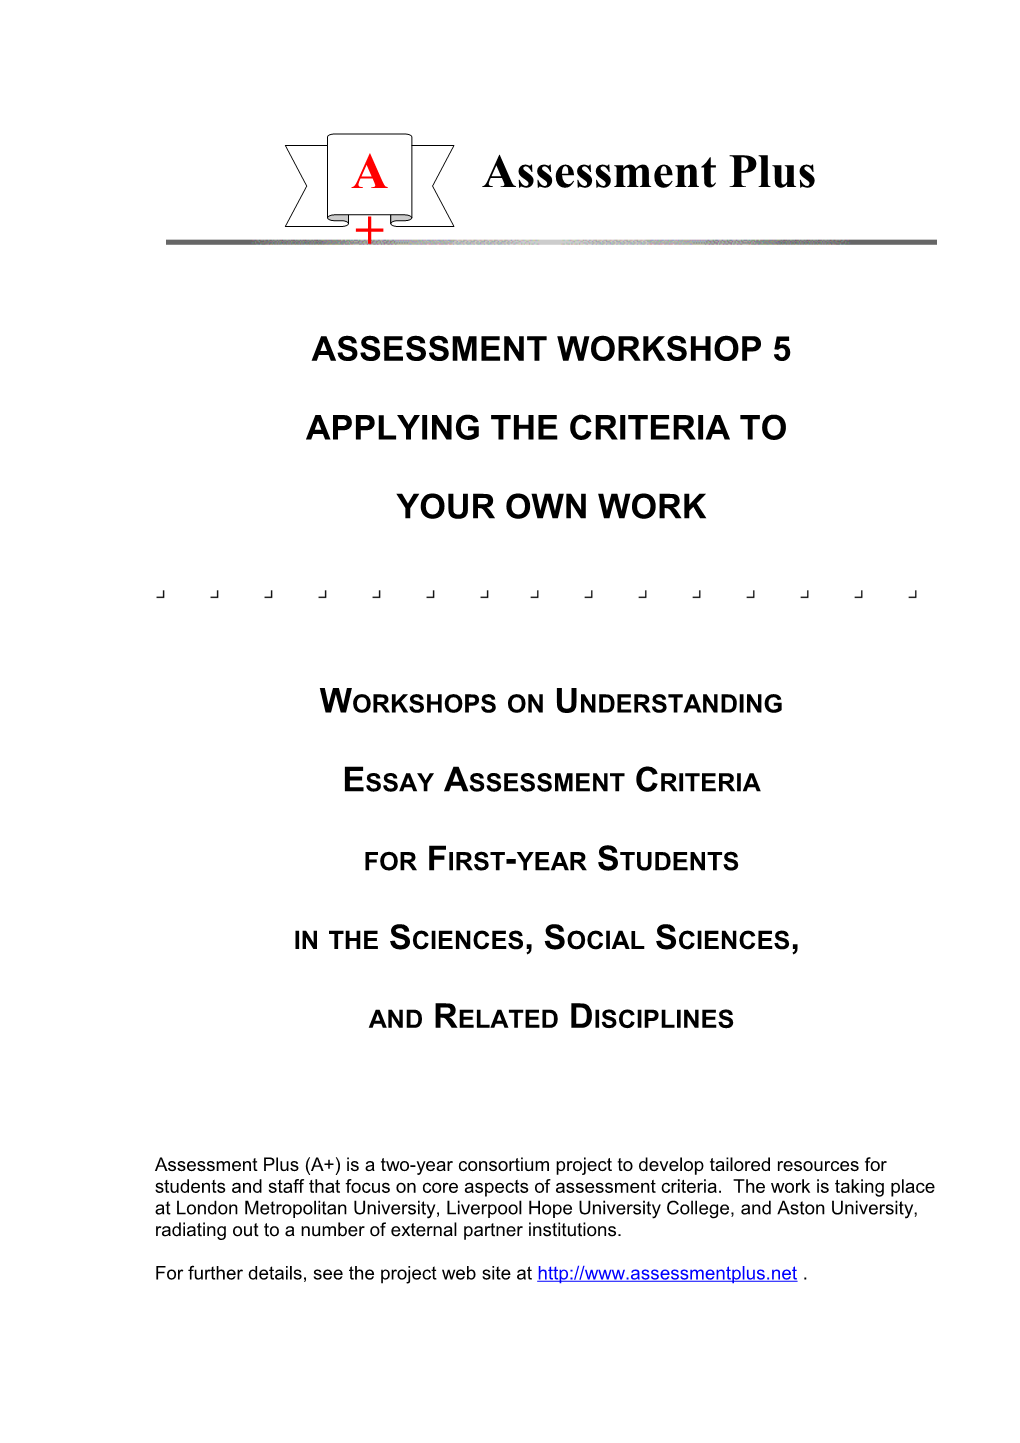 Workshops on Understanding